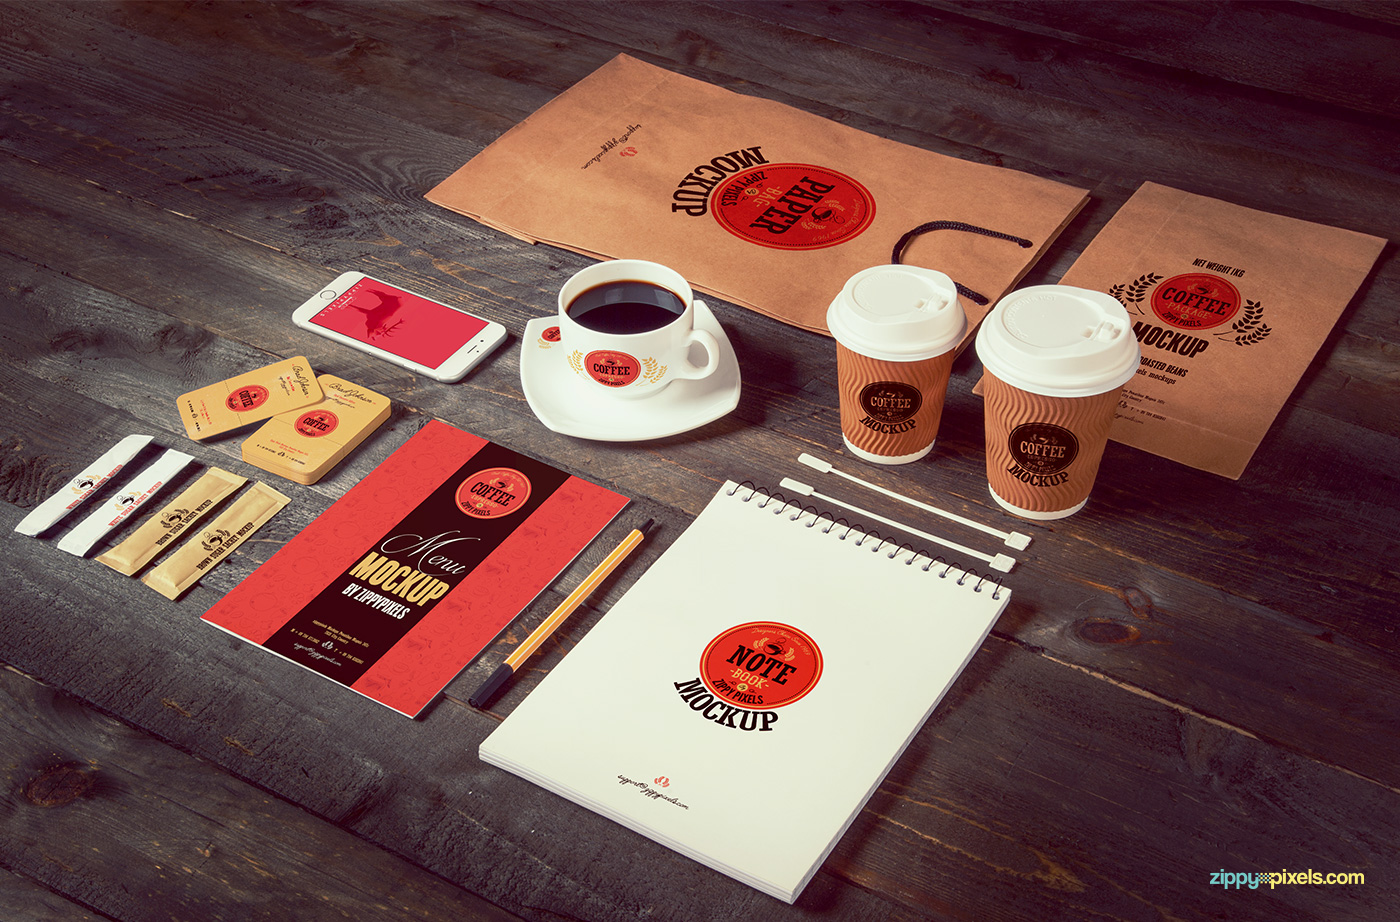 Mockup mockups psd brand identity Corporate Identity brand logo coffee mockups cup Paper Bags Shopping bag menu Label sachet